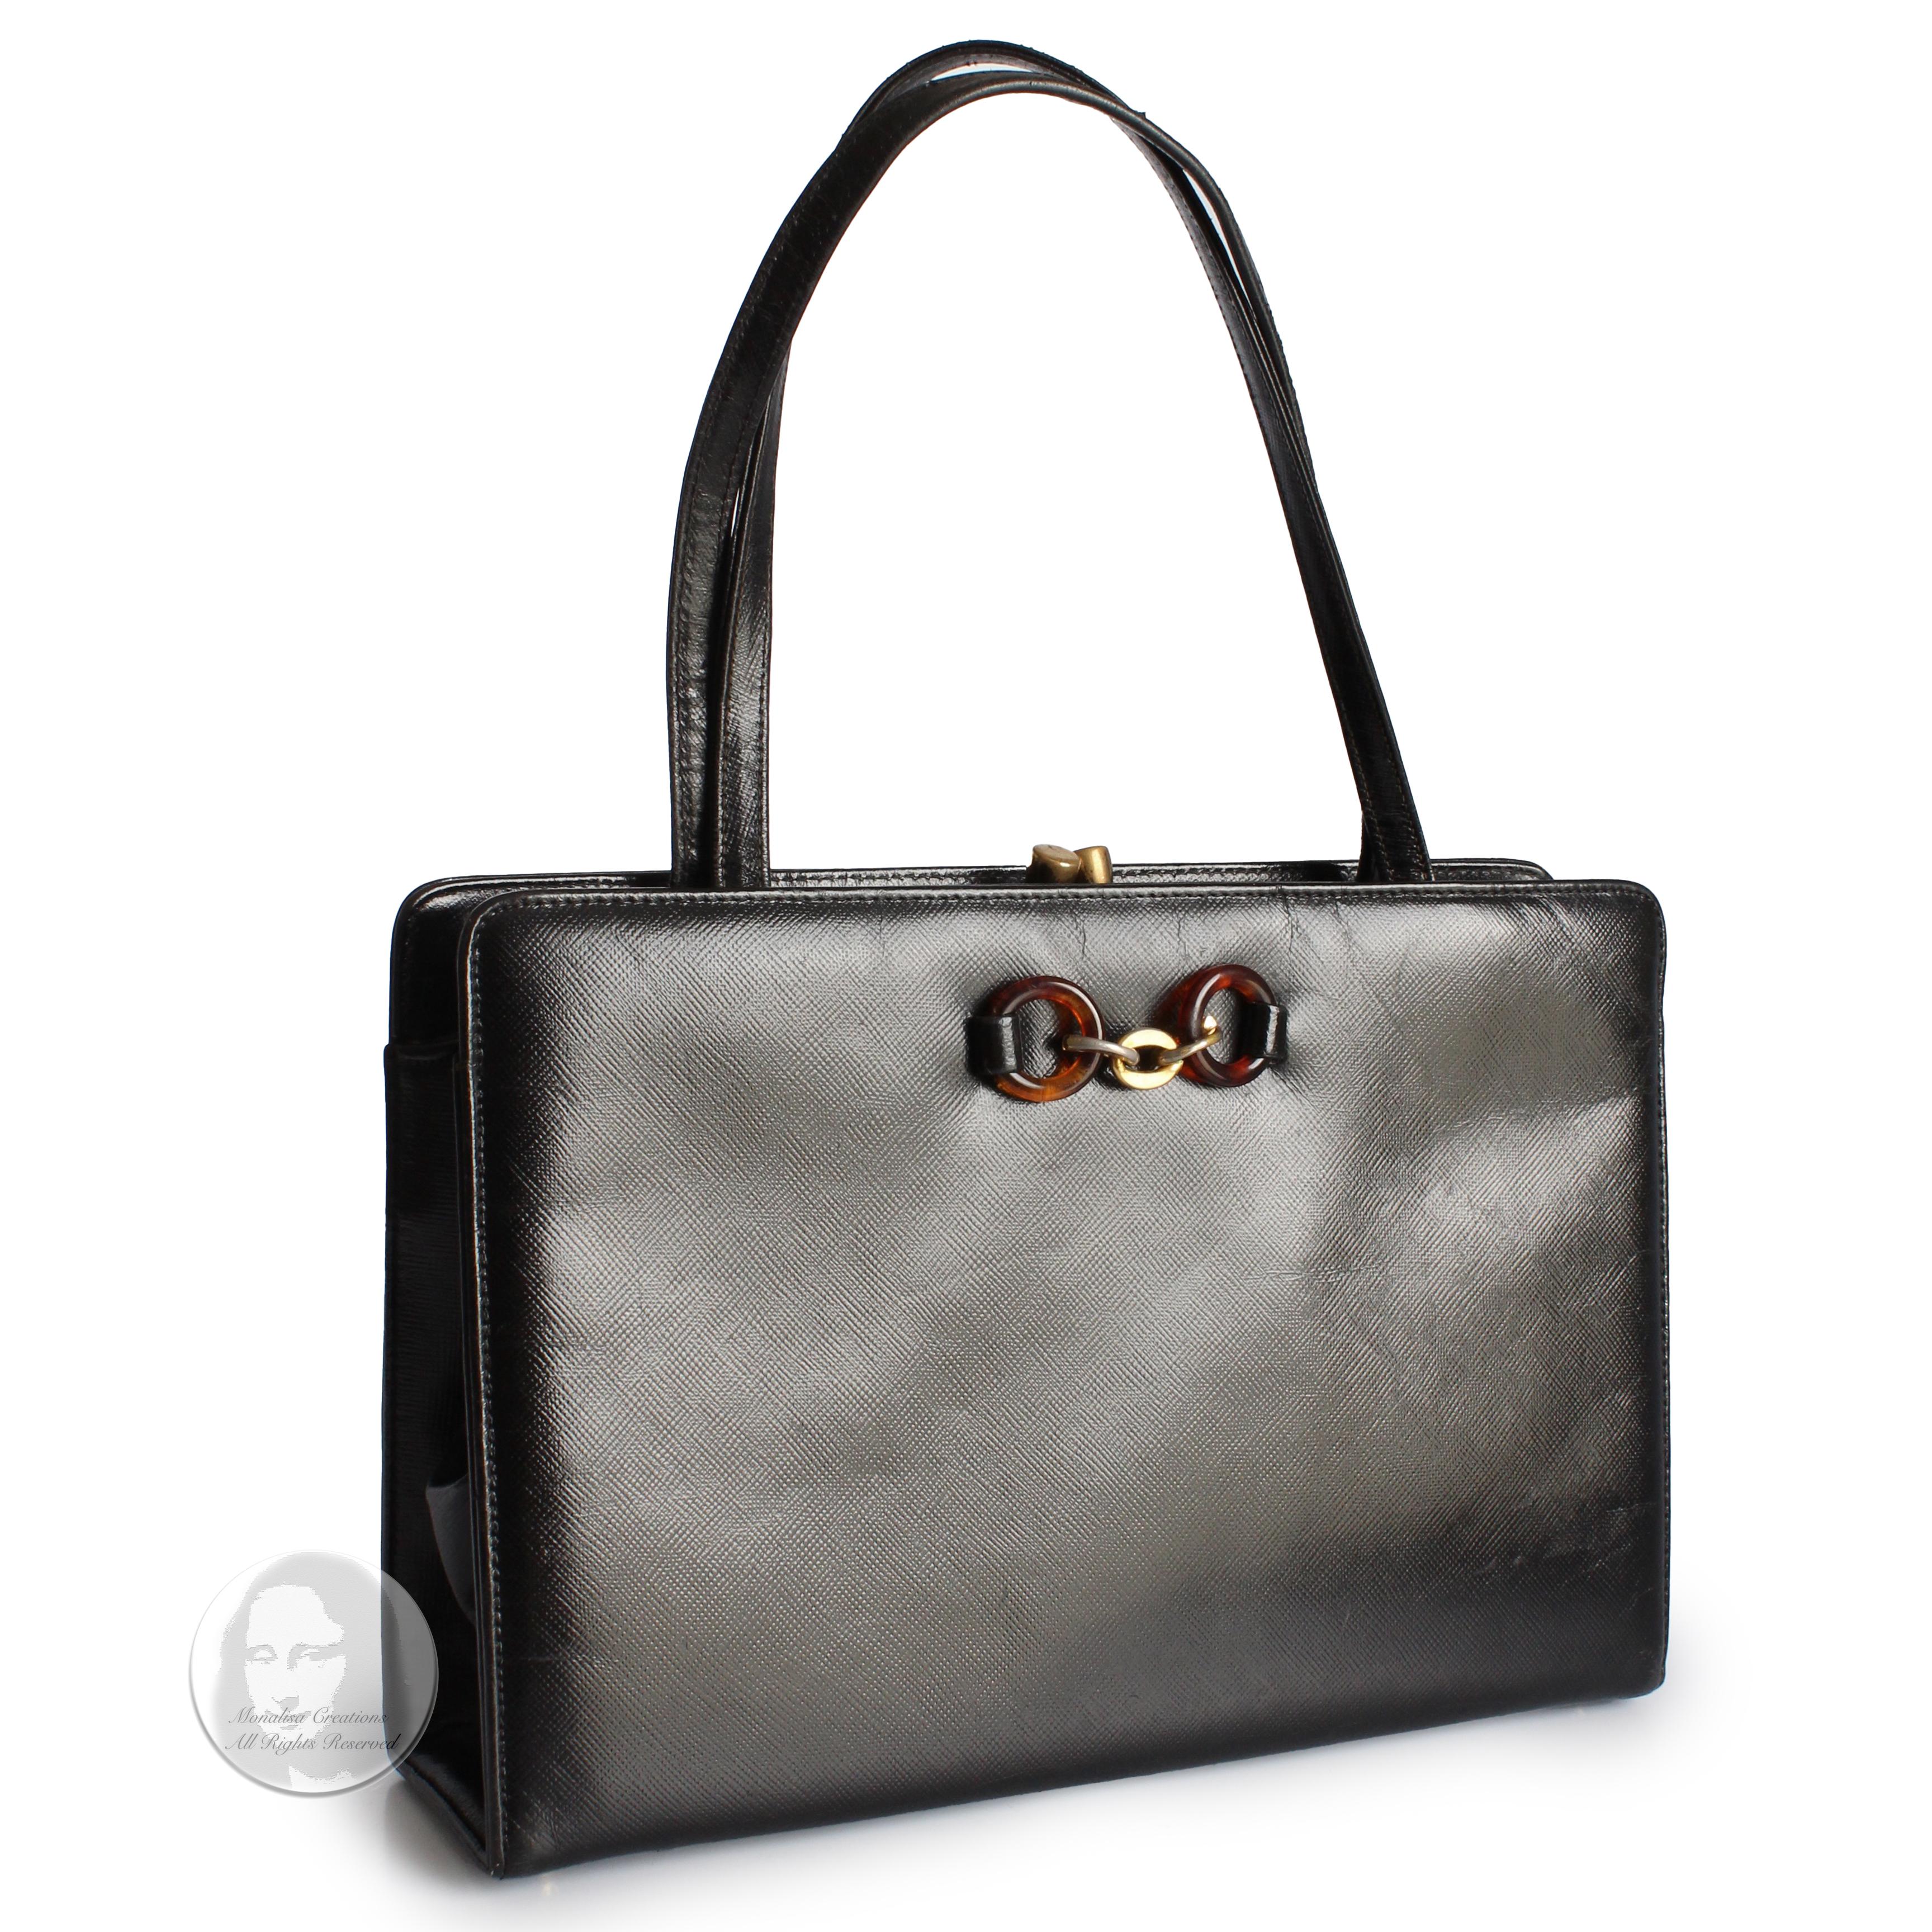 Bienen-Davis Evening Bag Black Saffiano Textured Leather Rare Vintage 1970s In Good Condition For Sale In Port Saint Lucie, FL